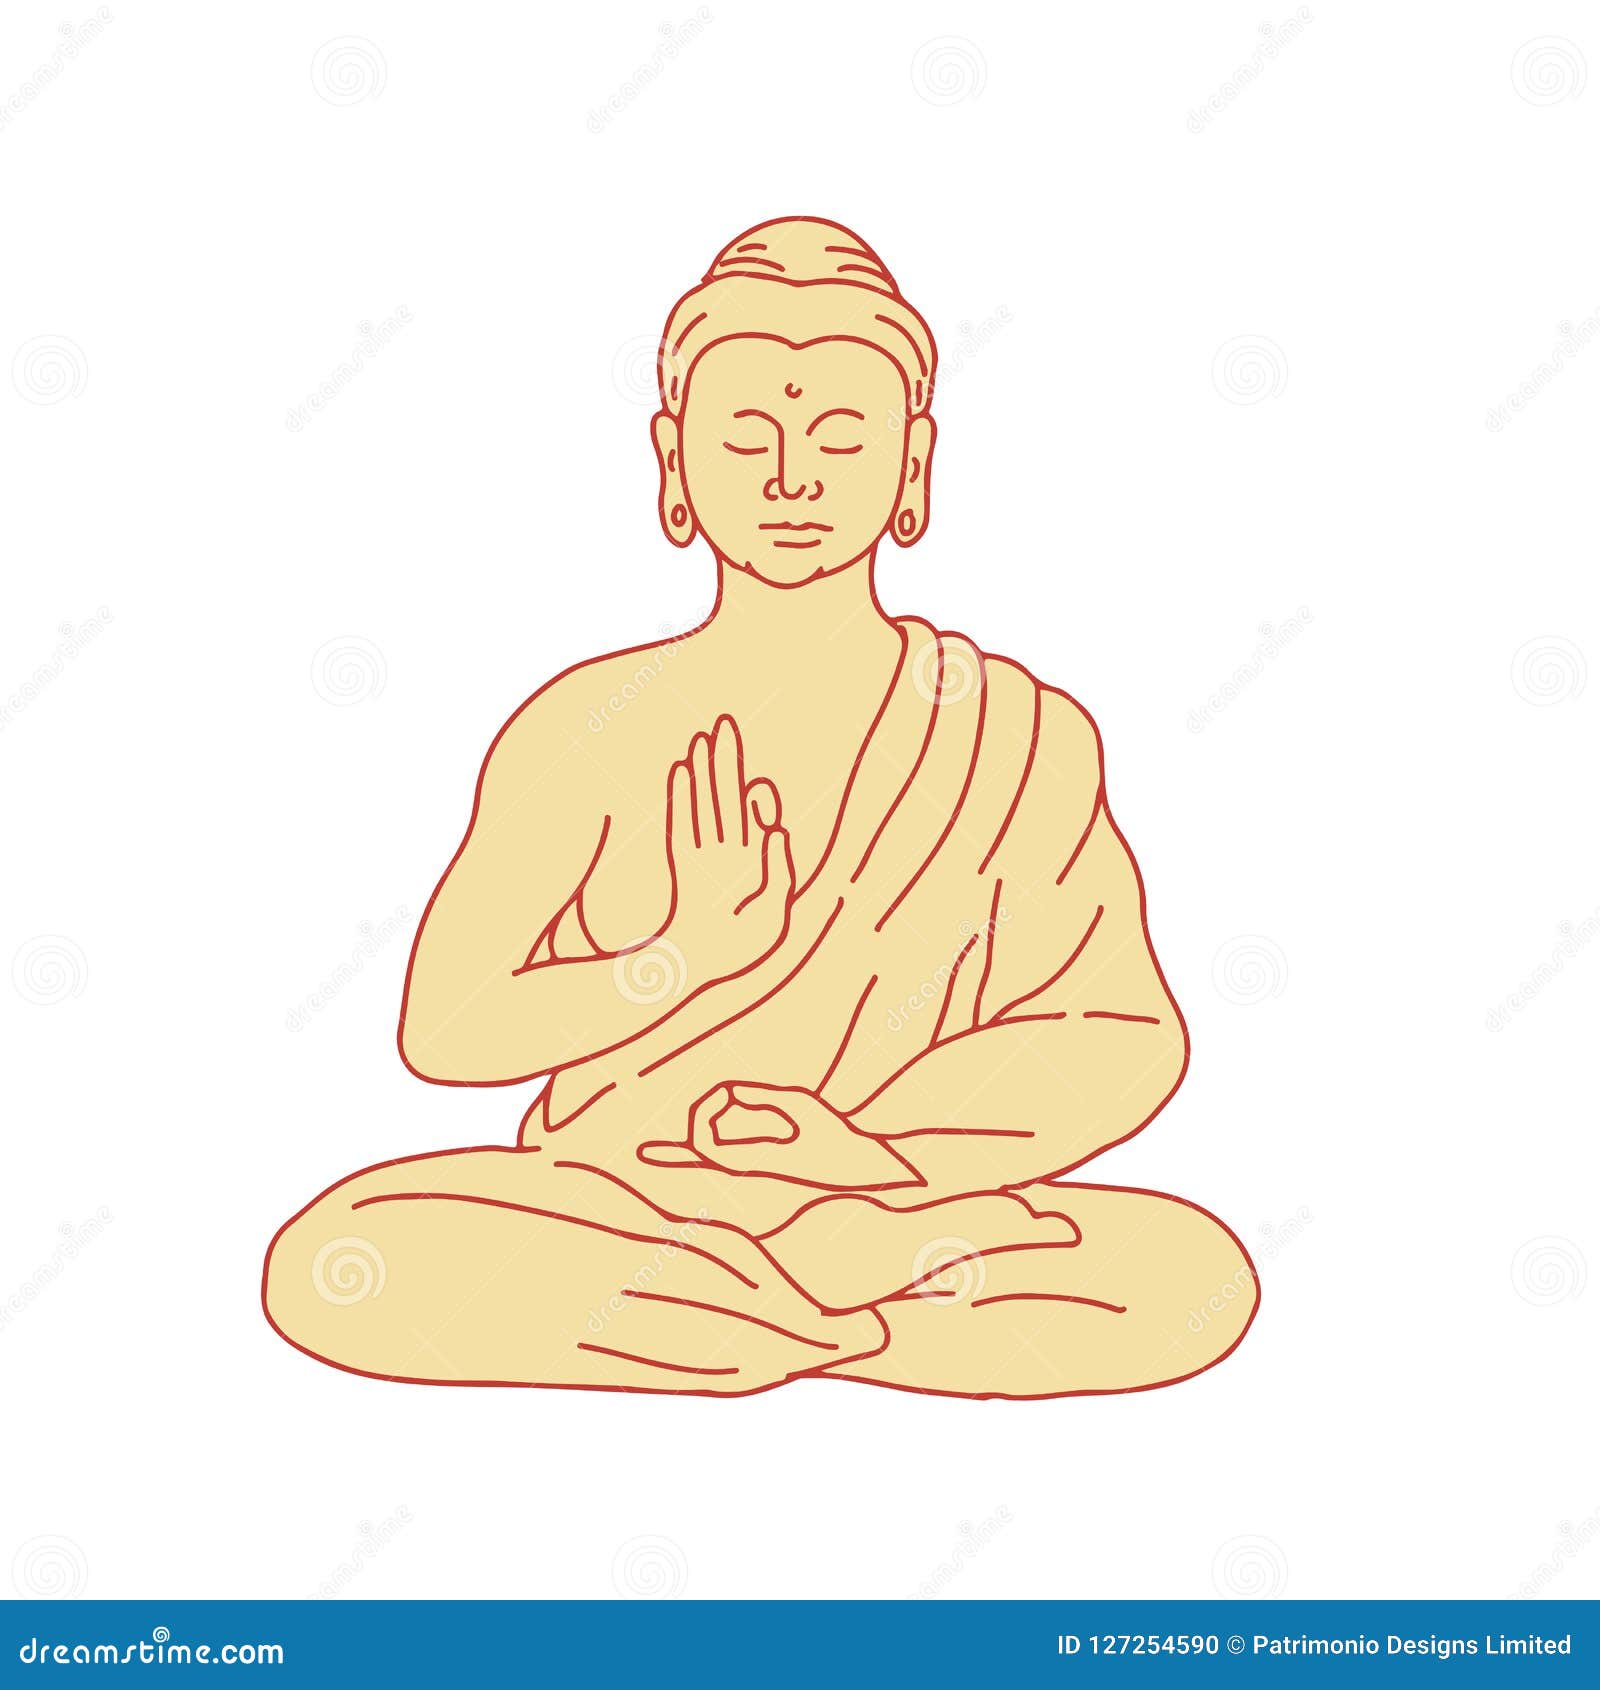 Gautam Buddha Stock Photos and Pictures - 1,789 Images | Shutterstock-saigonsouth.com.vn